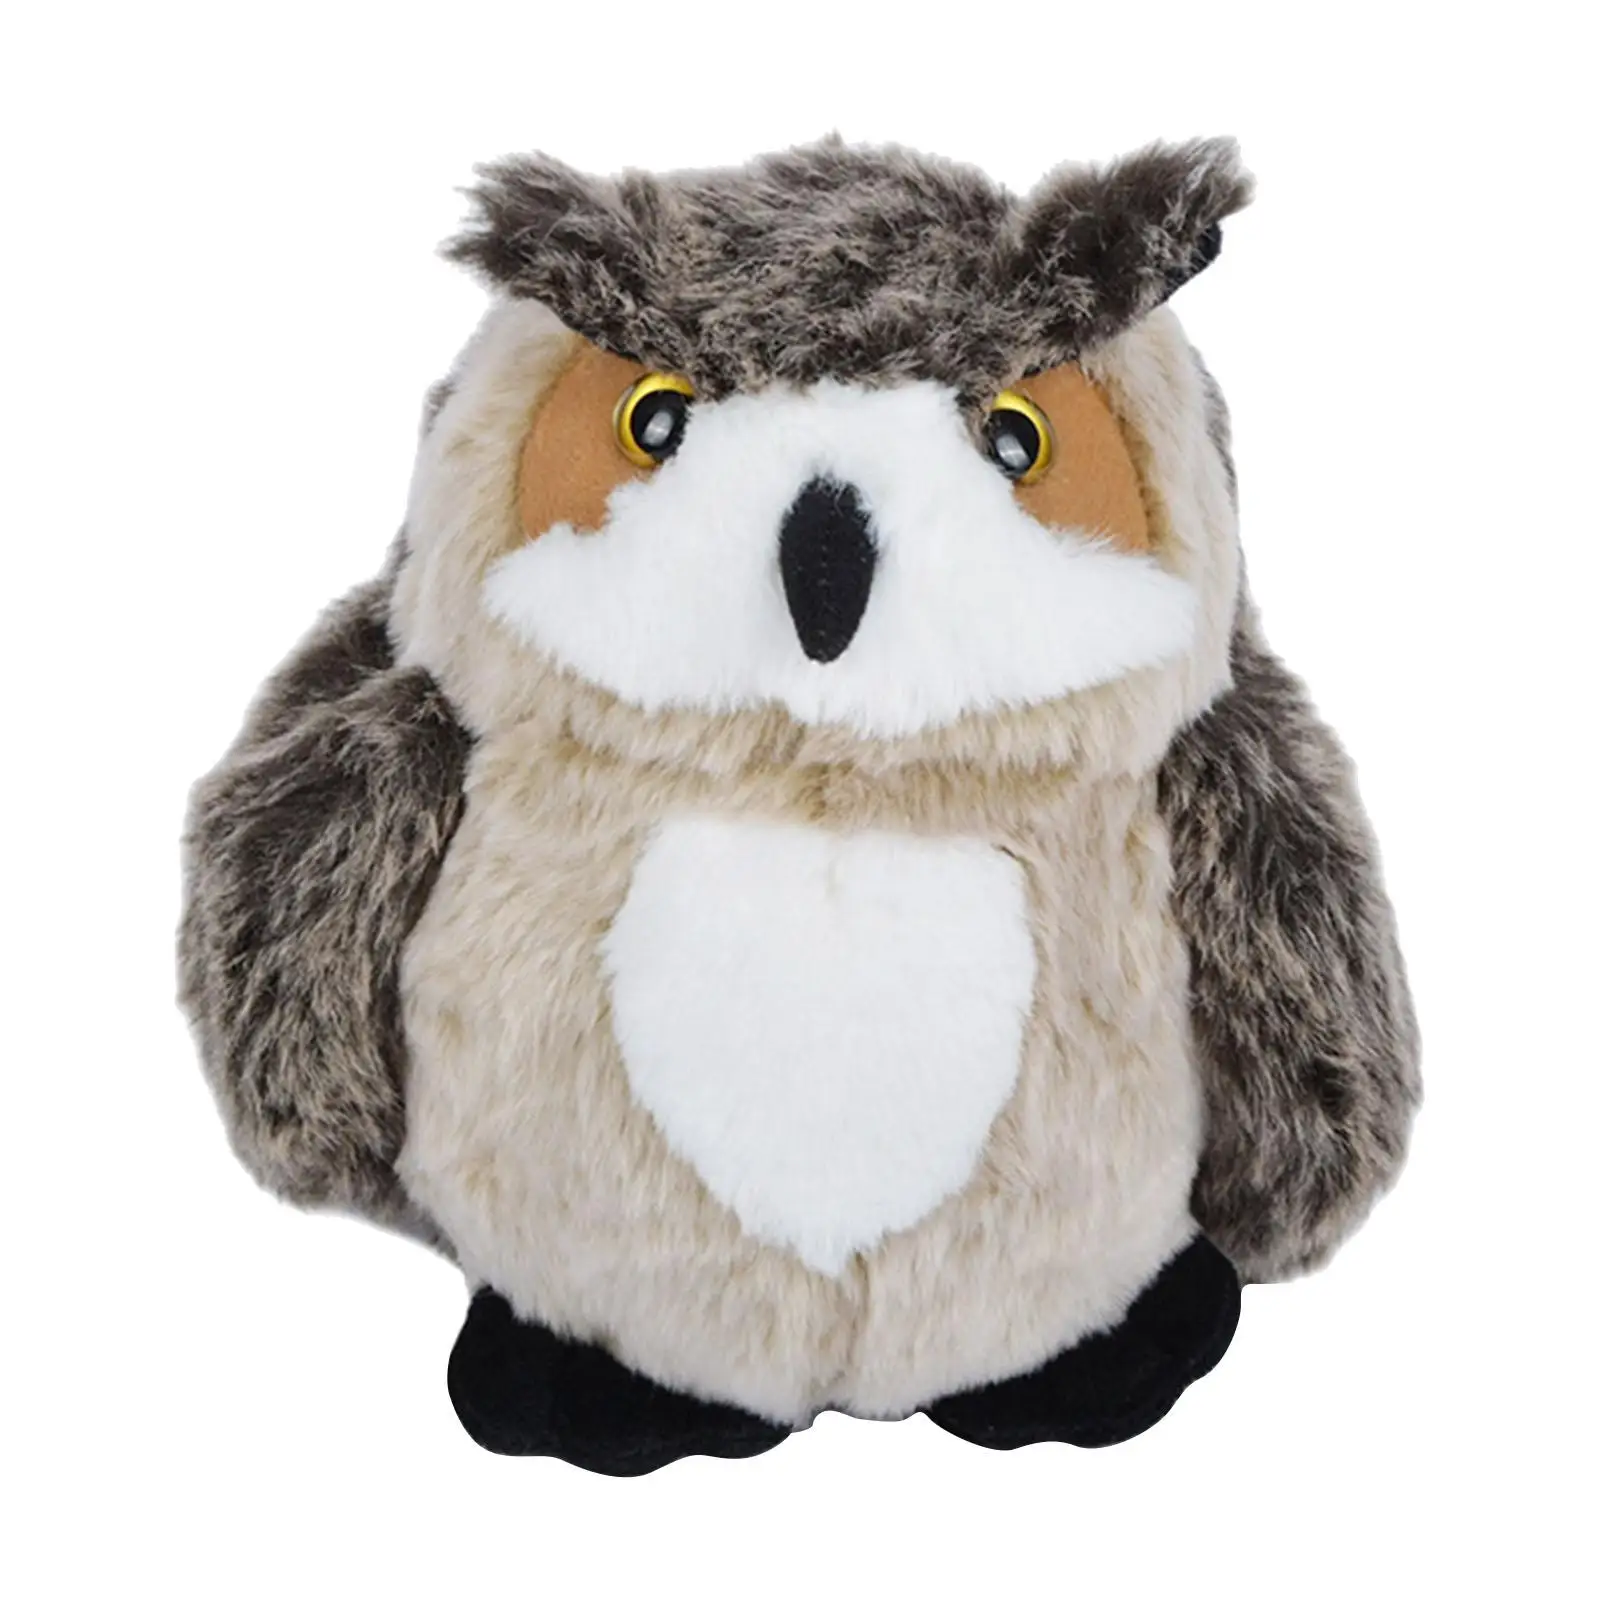 

Owl Plush Toys Cute Animal Dolls Animal Plush Padding Soft Classic Lifelike Imitation Owl for Birthday Gifts Girls Kids Children